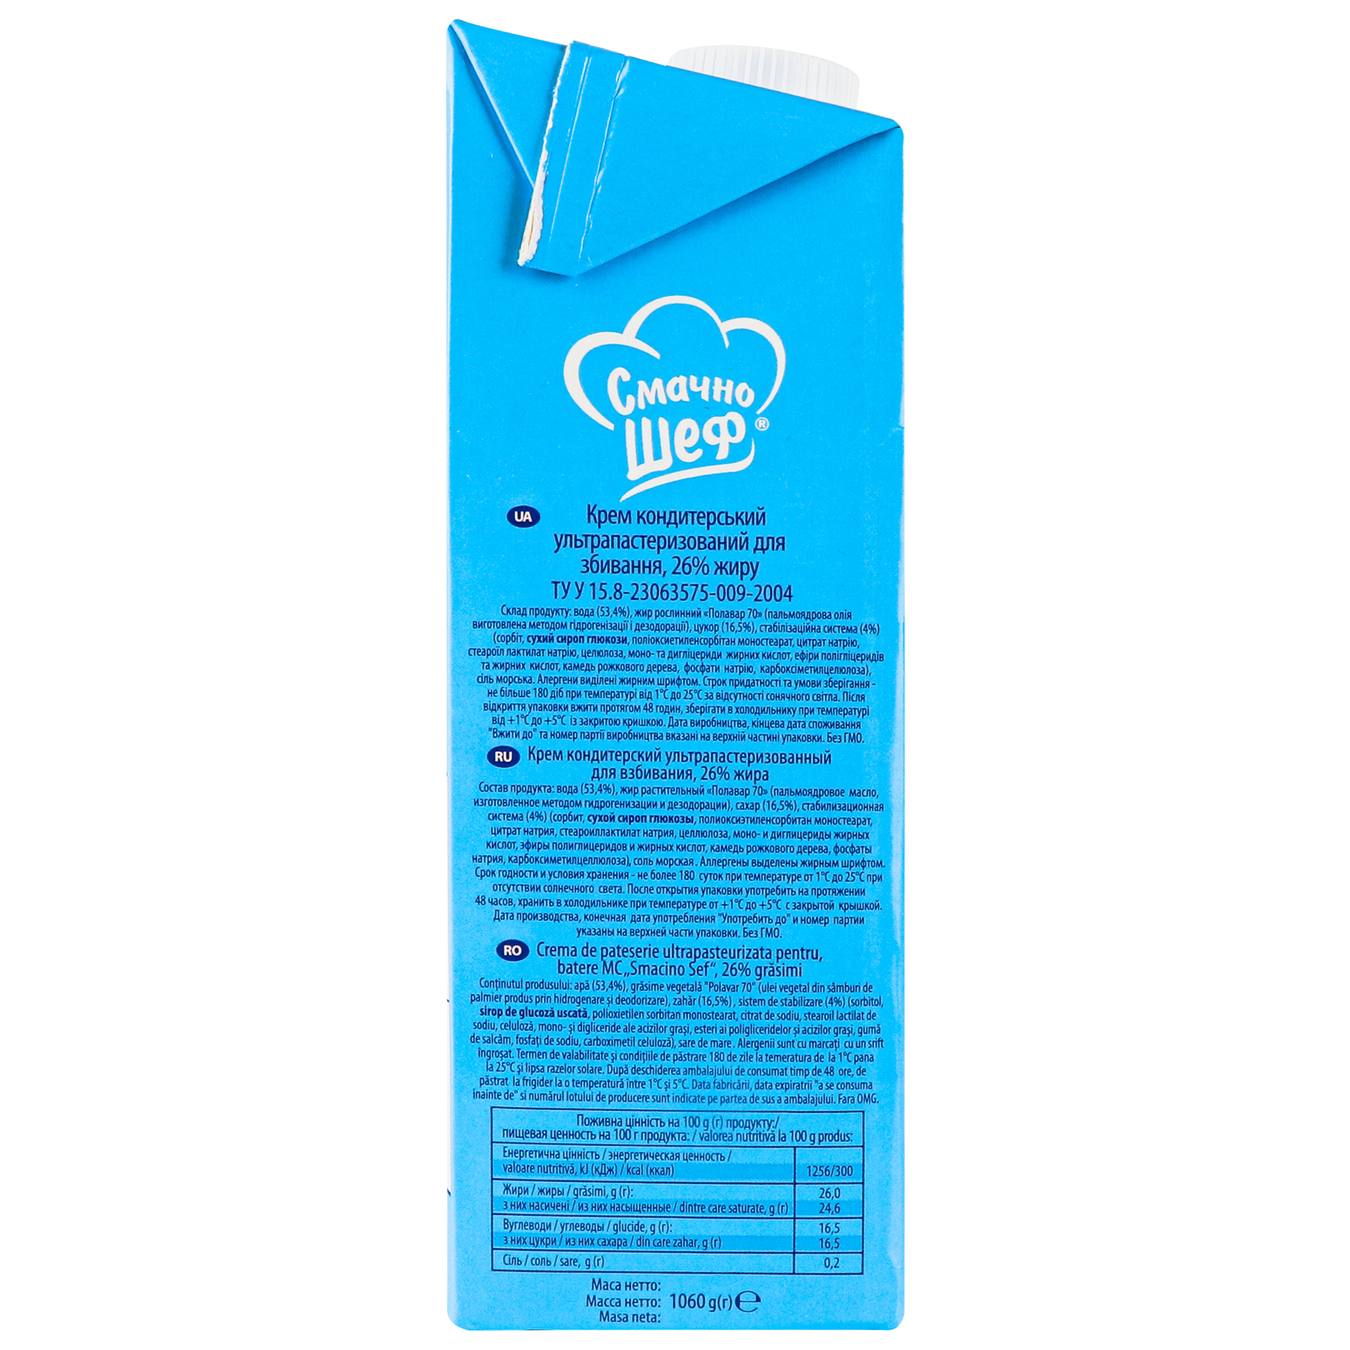 Cream Smachno Shef Сonfectionery UltraPasteurized 26% 1060g 8